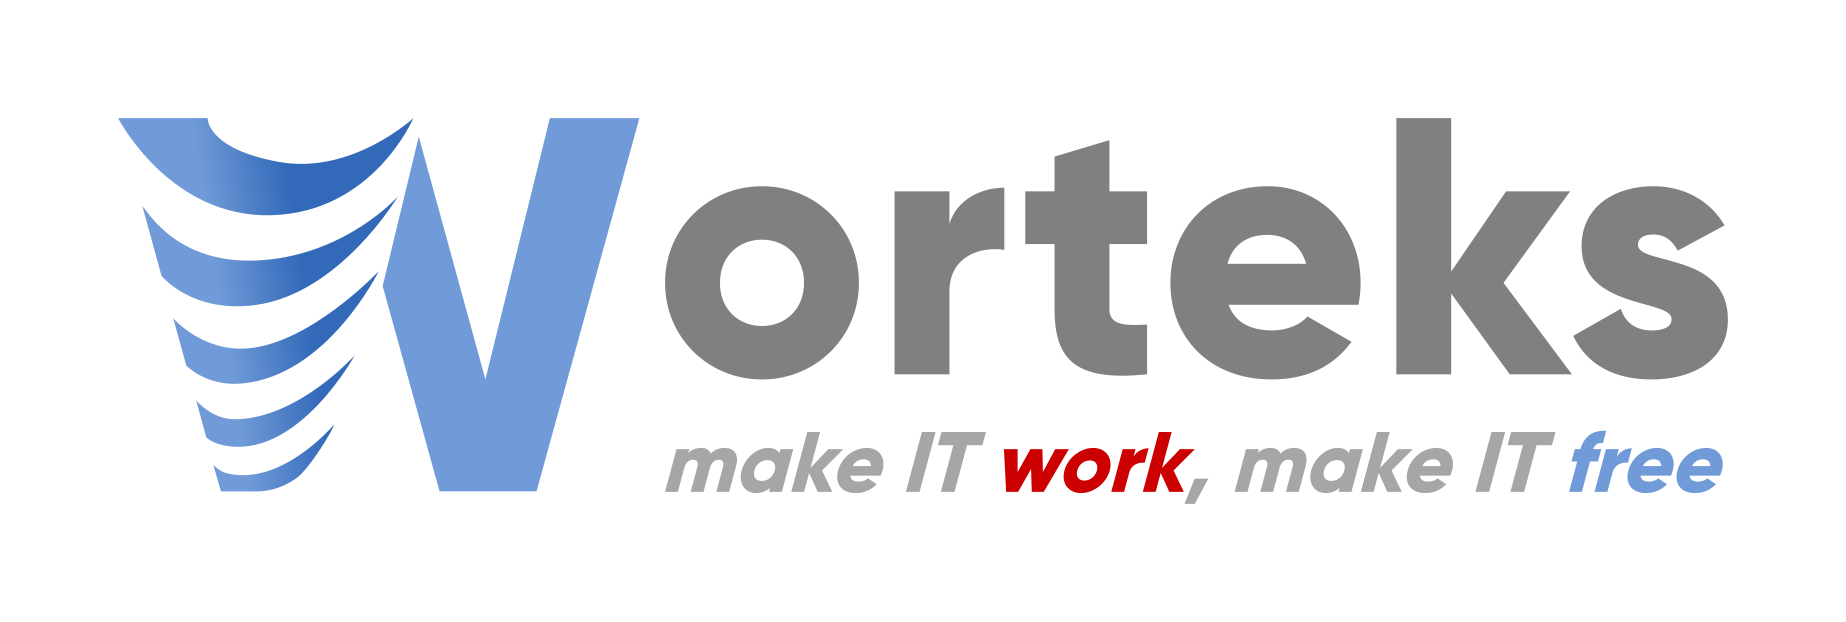 Worteks Logo